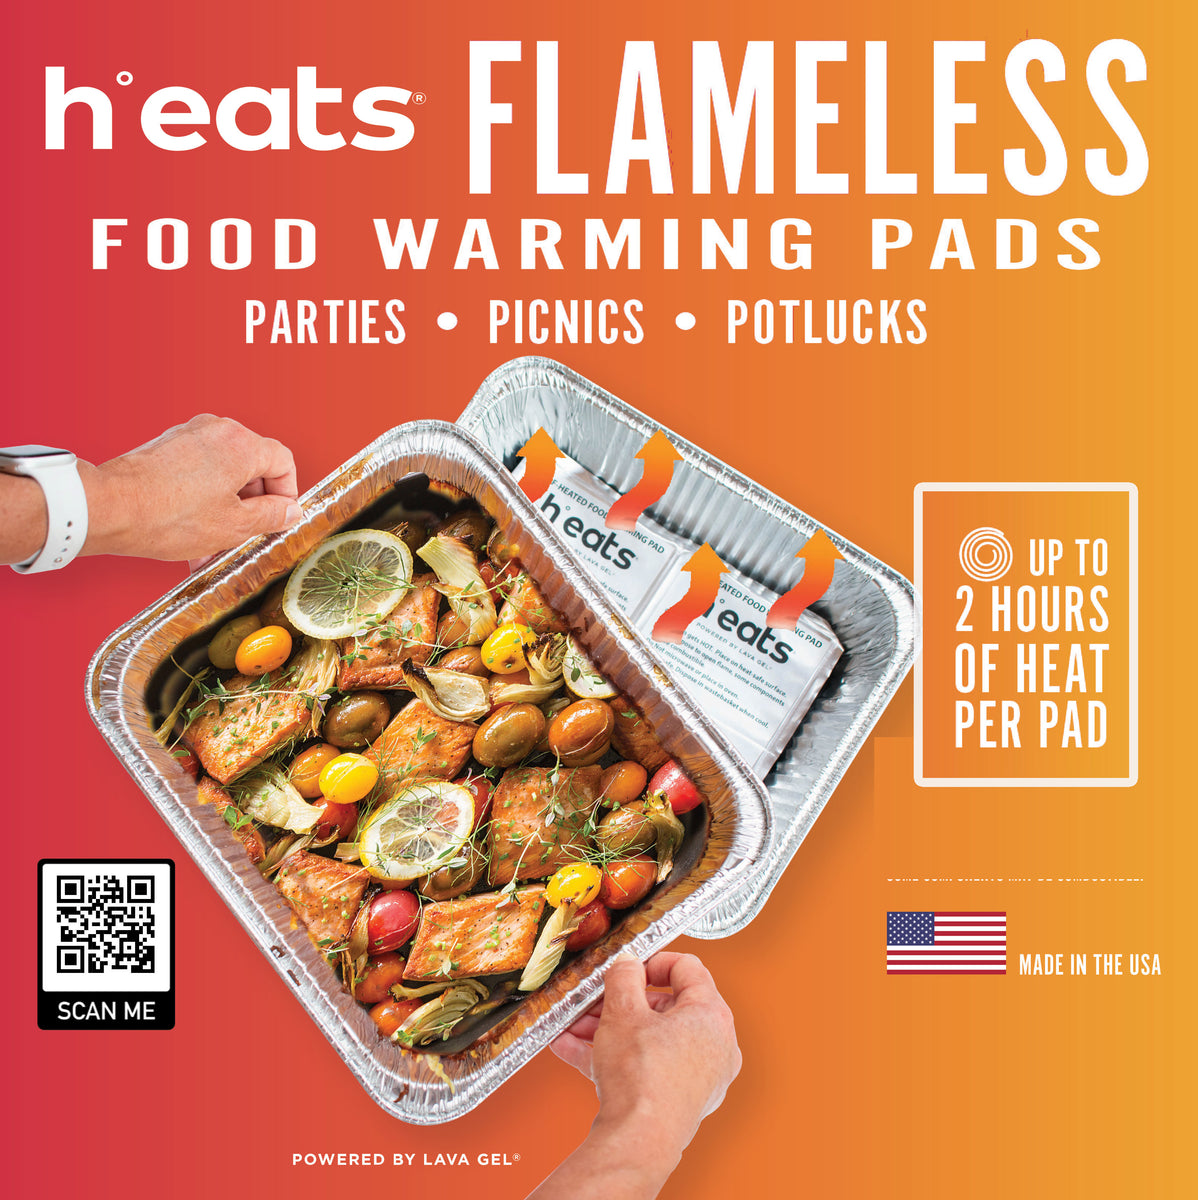 Heats Self Heating Food Warming Pads - Made in USA